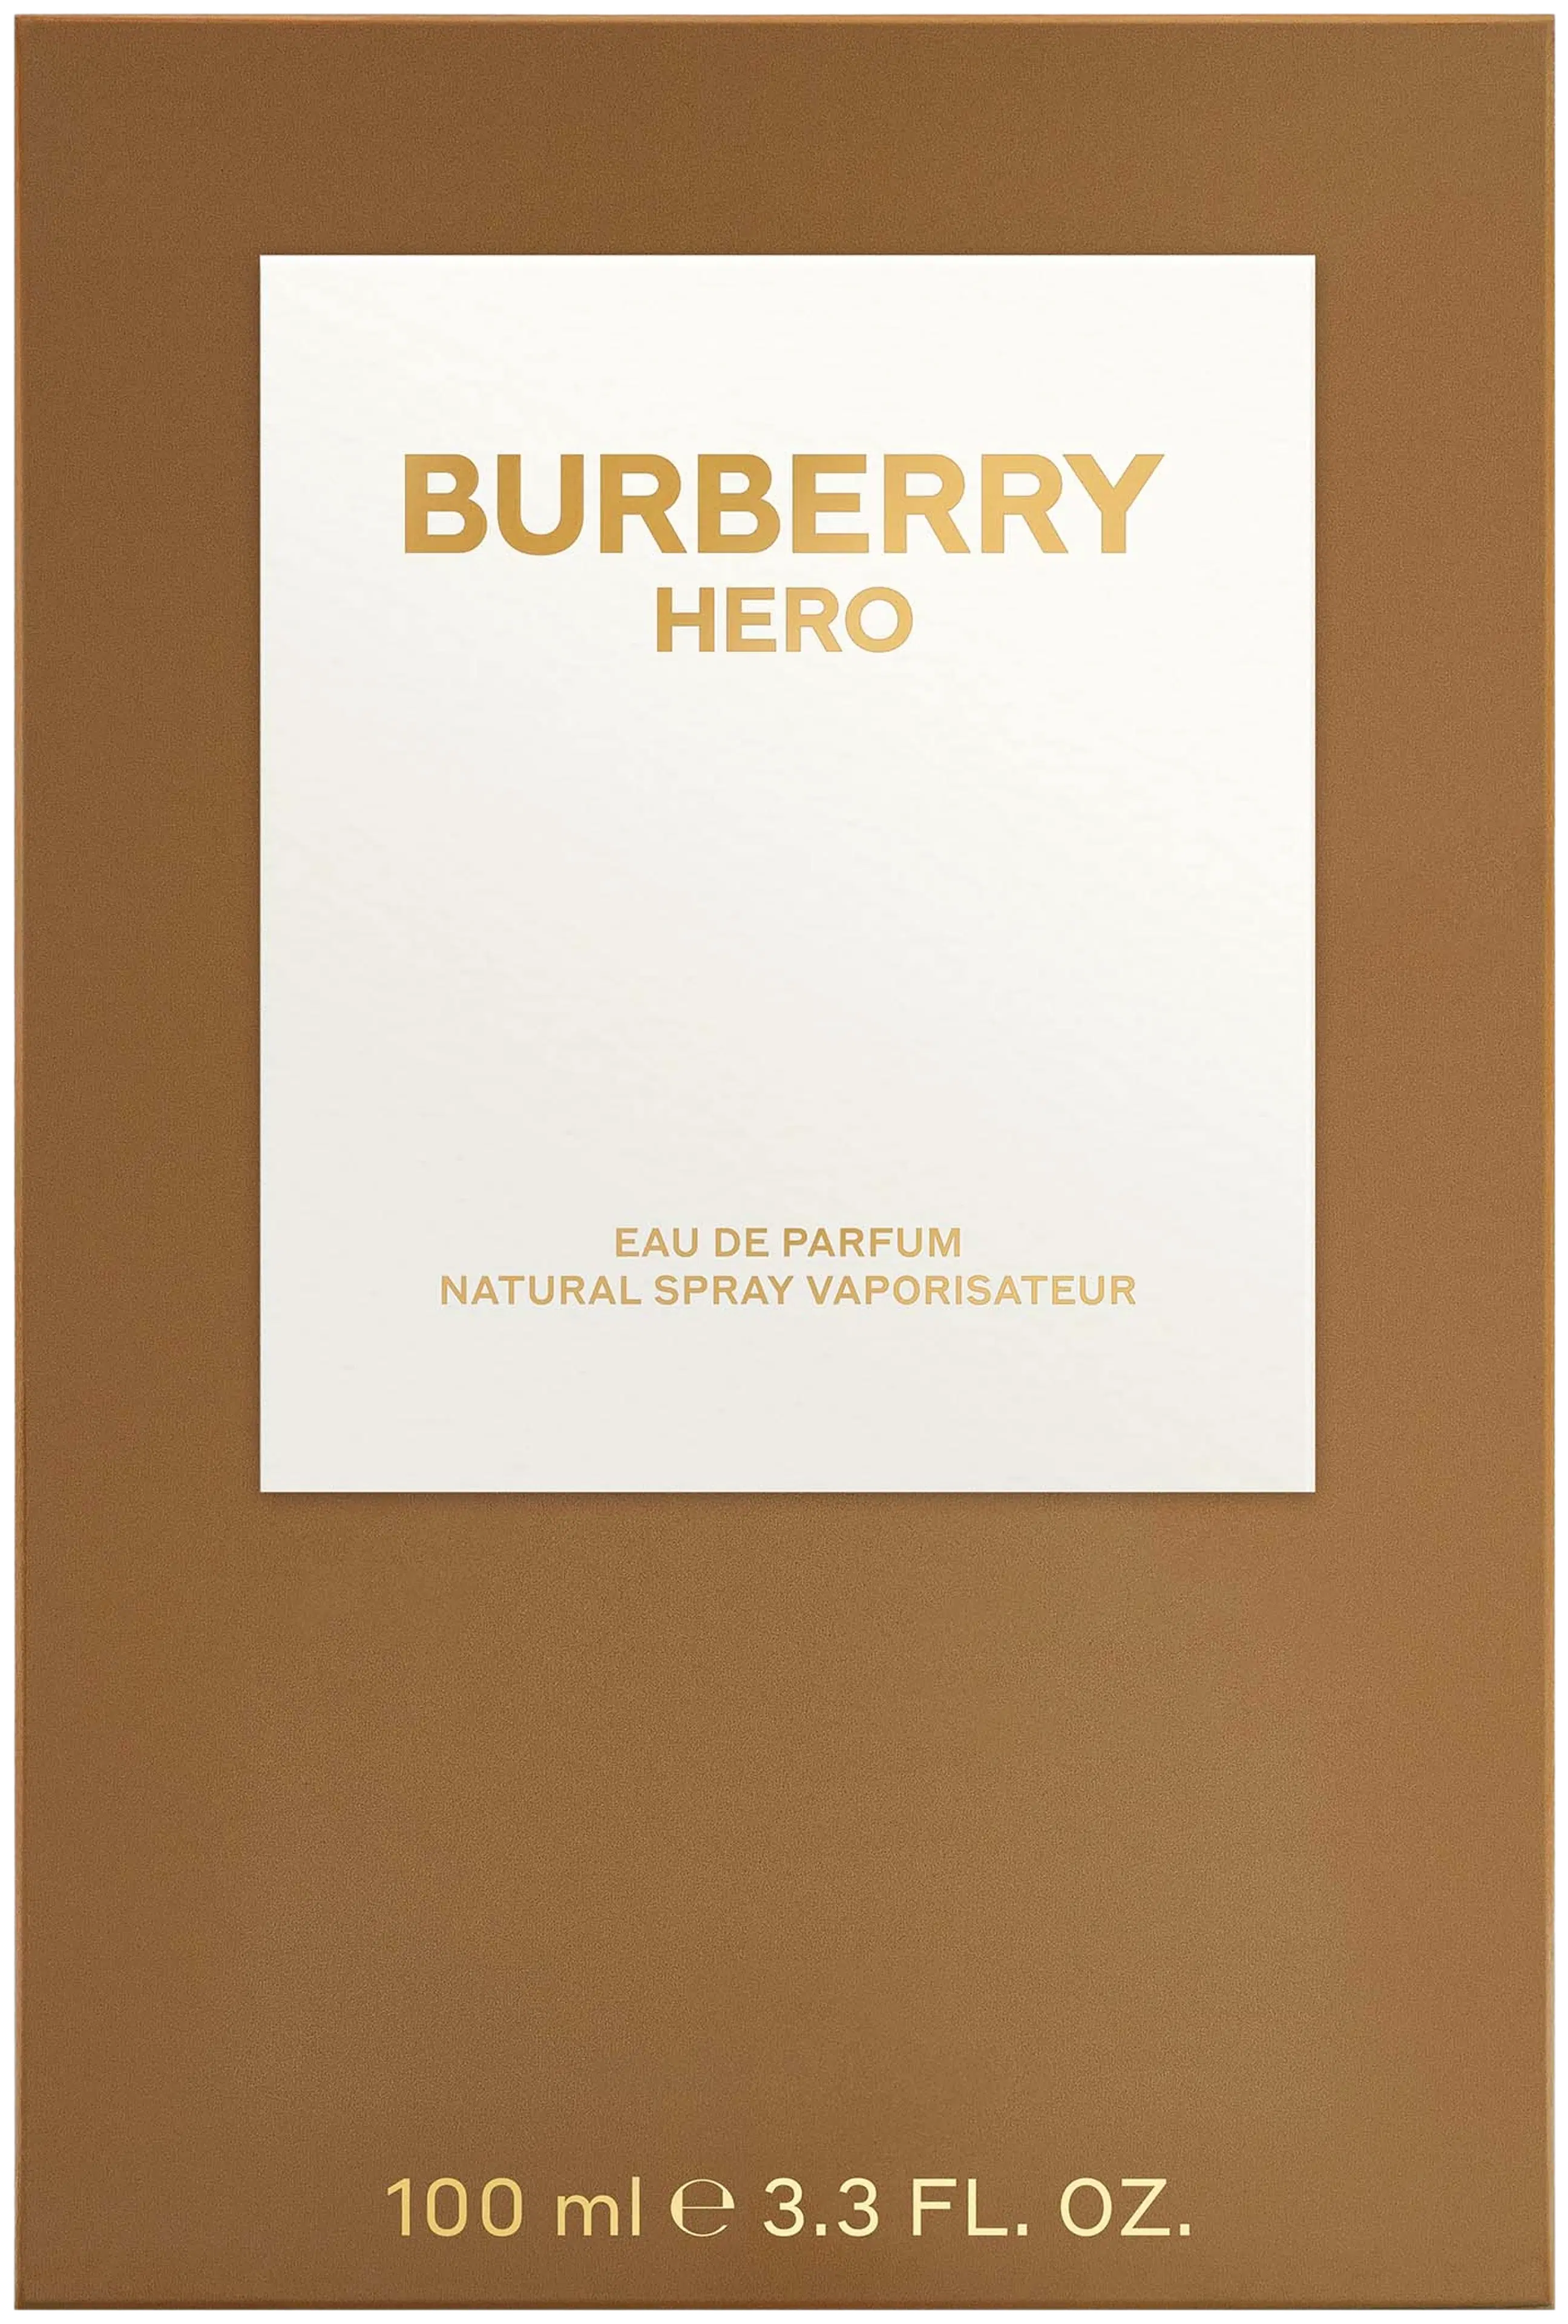 Burberry Hero EdP tuoksu 50 ml